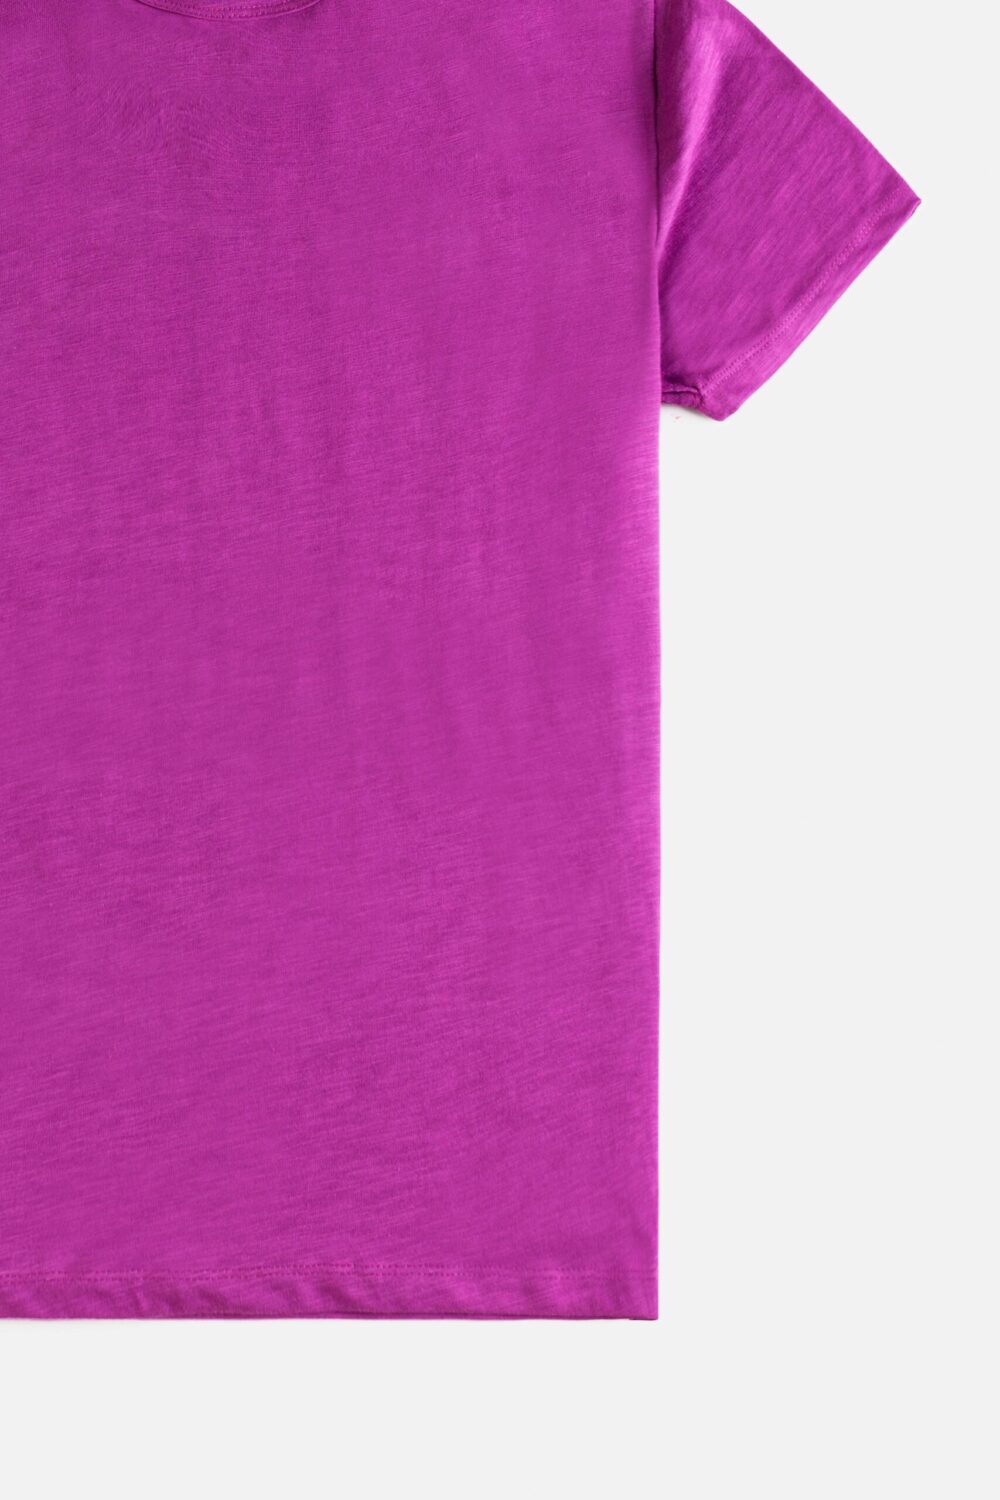 ZR Woman Cotton T Shirt – Magenta